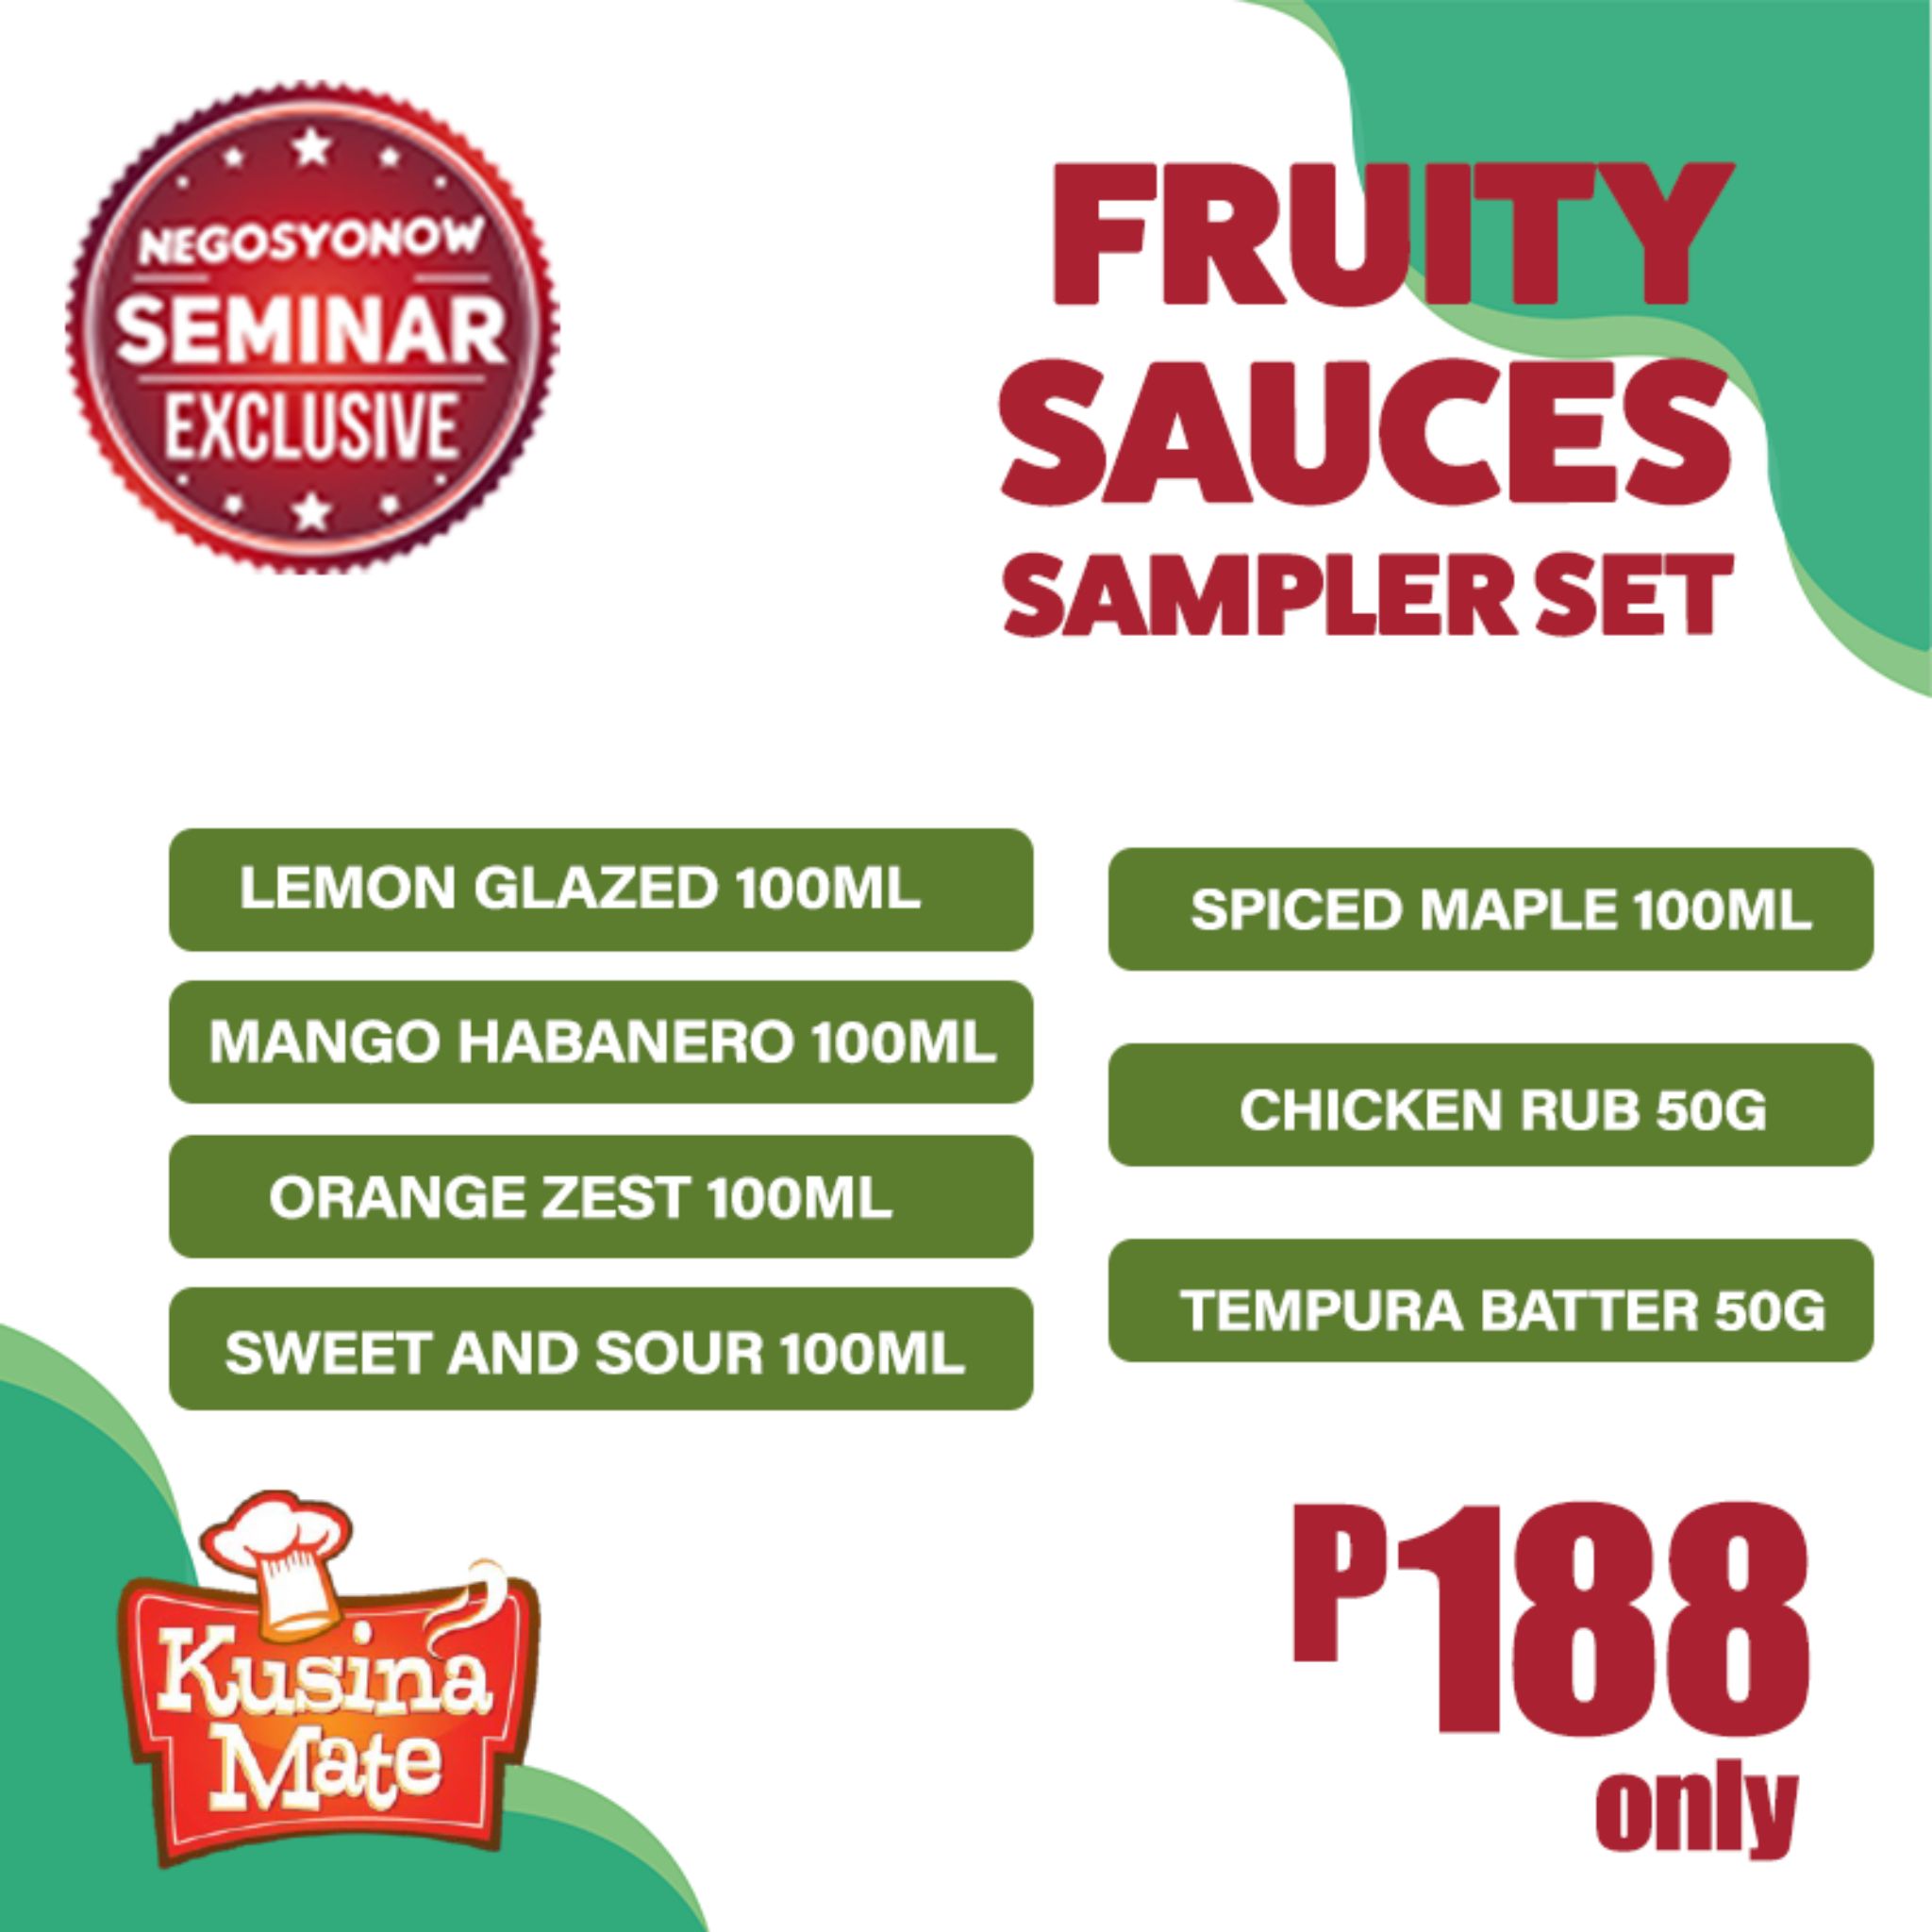 Fruity Sauces Sampler Set